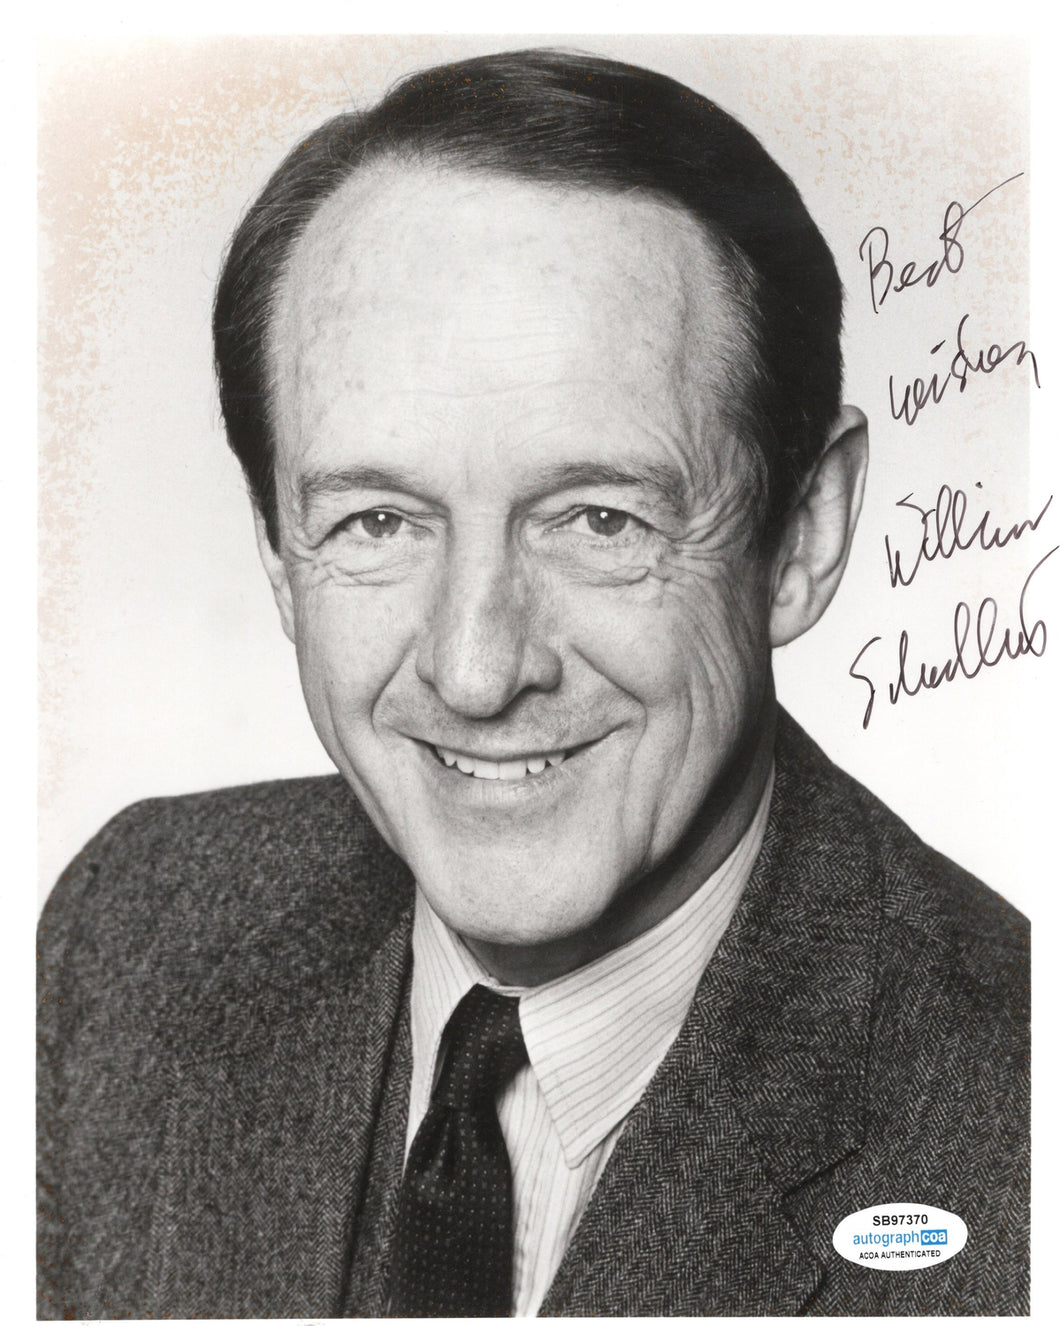 William Schallert Autographed Signed 8x10 b/w Portrait Photo Patty Duke Show